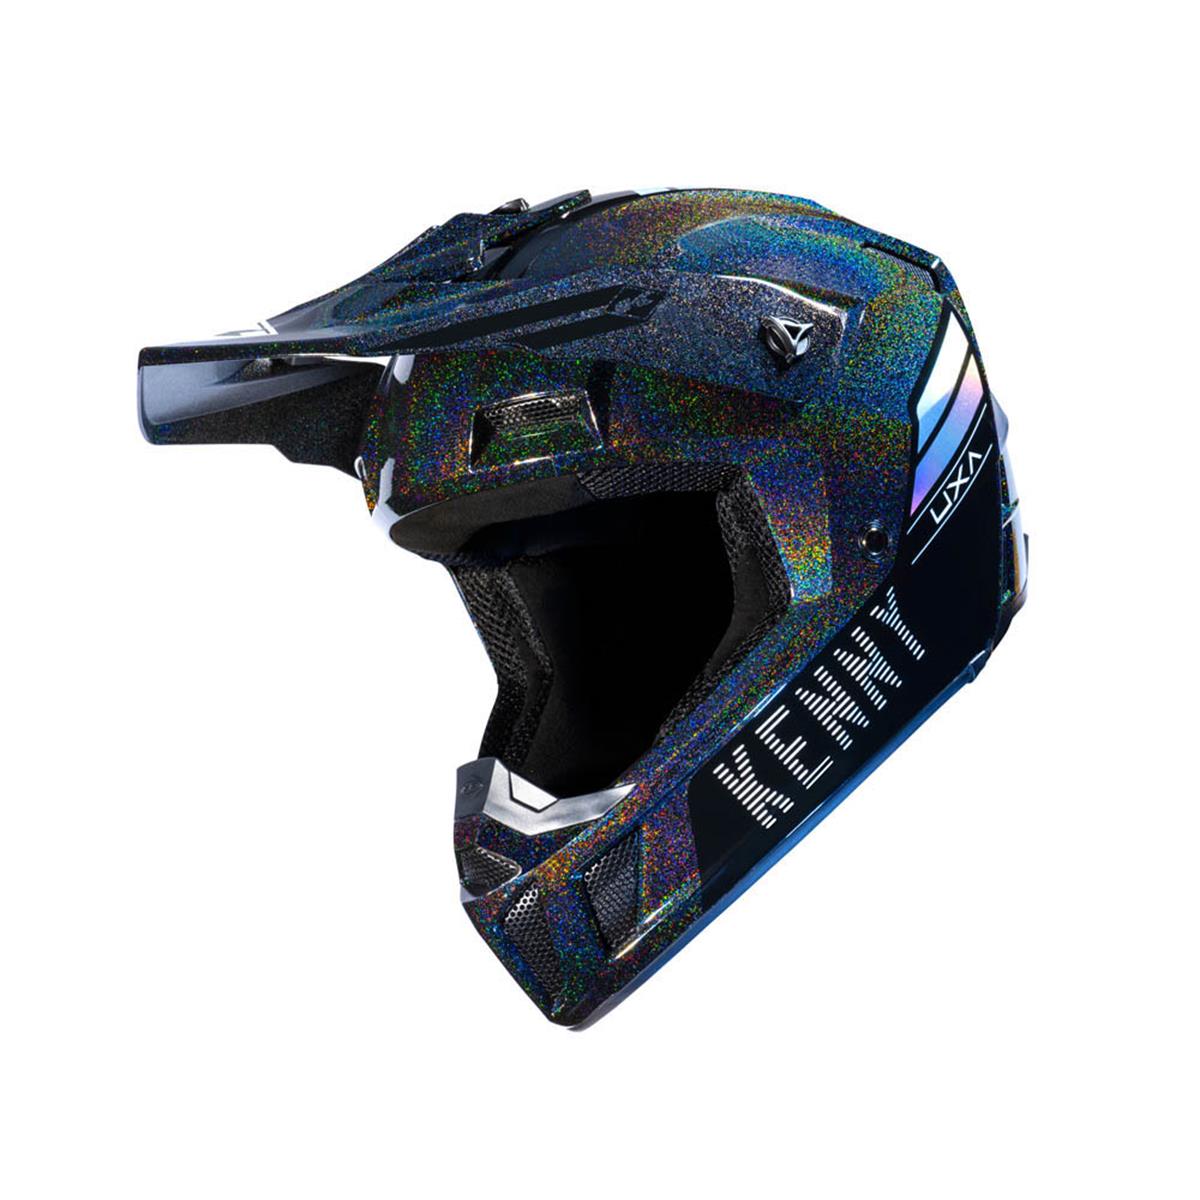 Kenny Motocross-Helm Performance